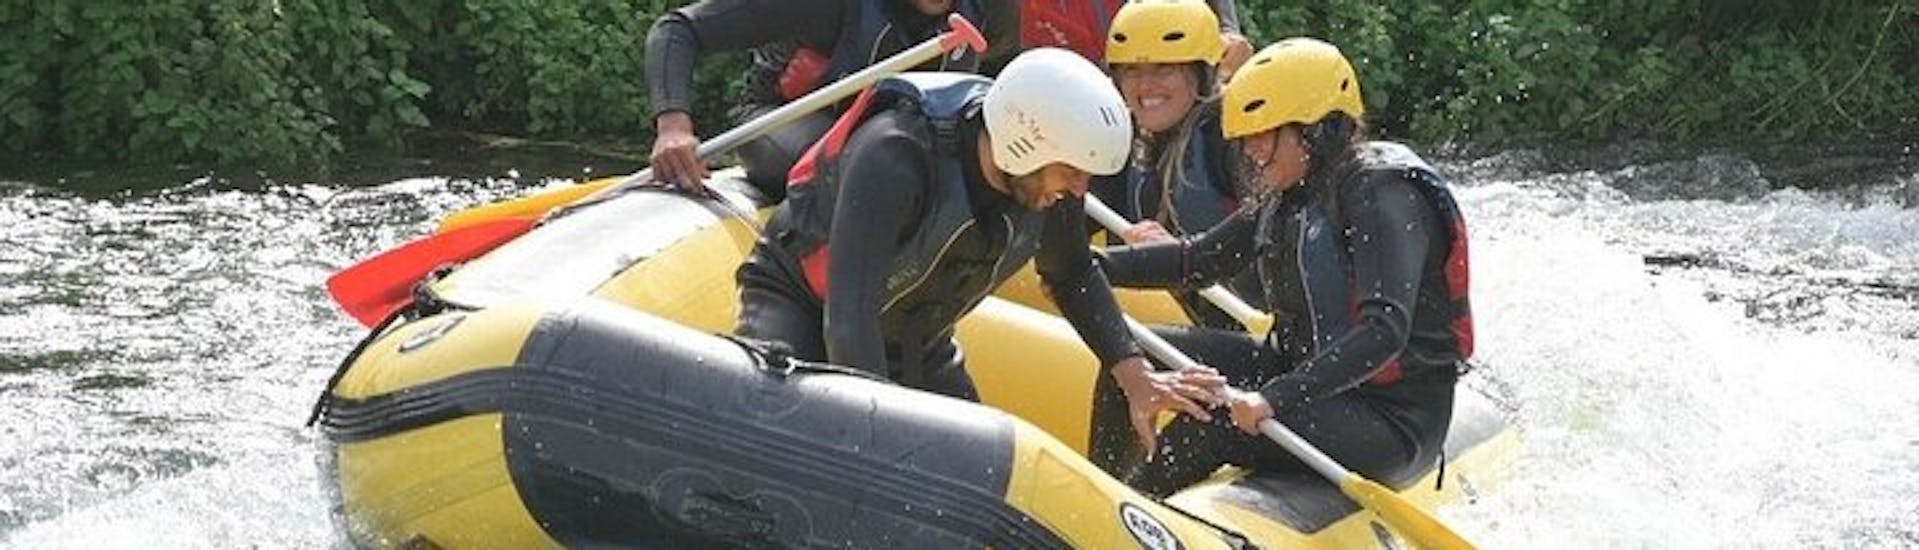 Rafting on the Gari River - Power Tour.